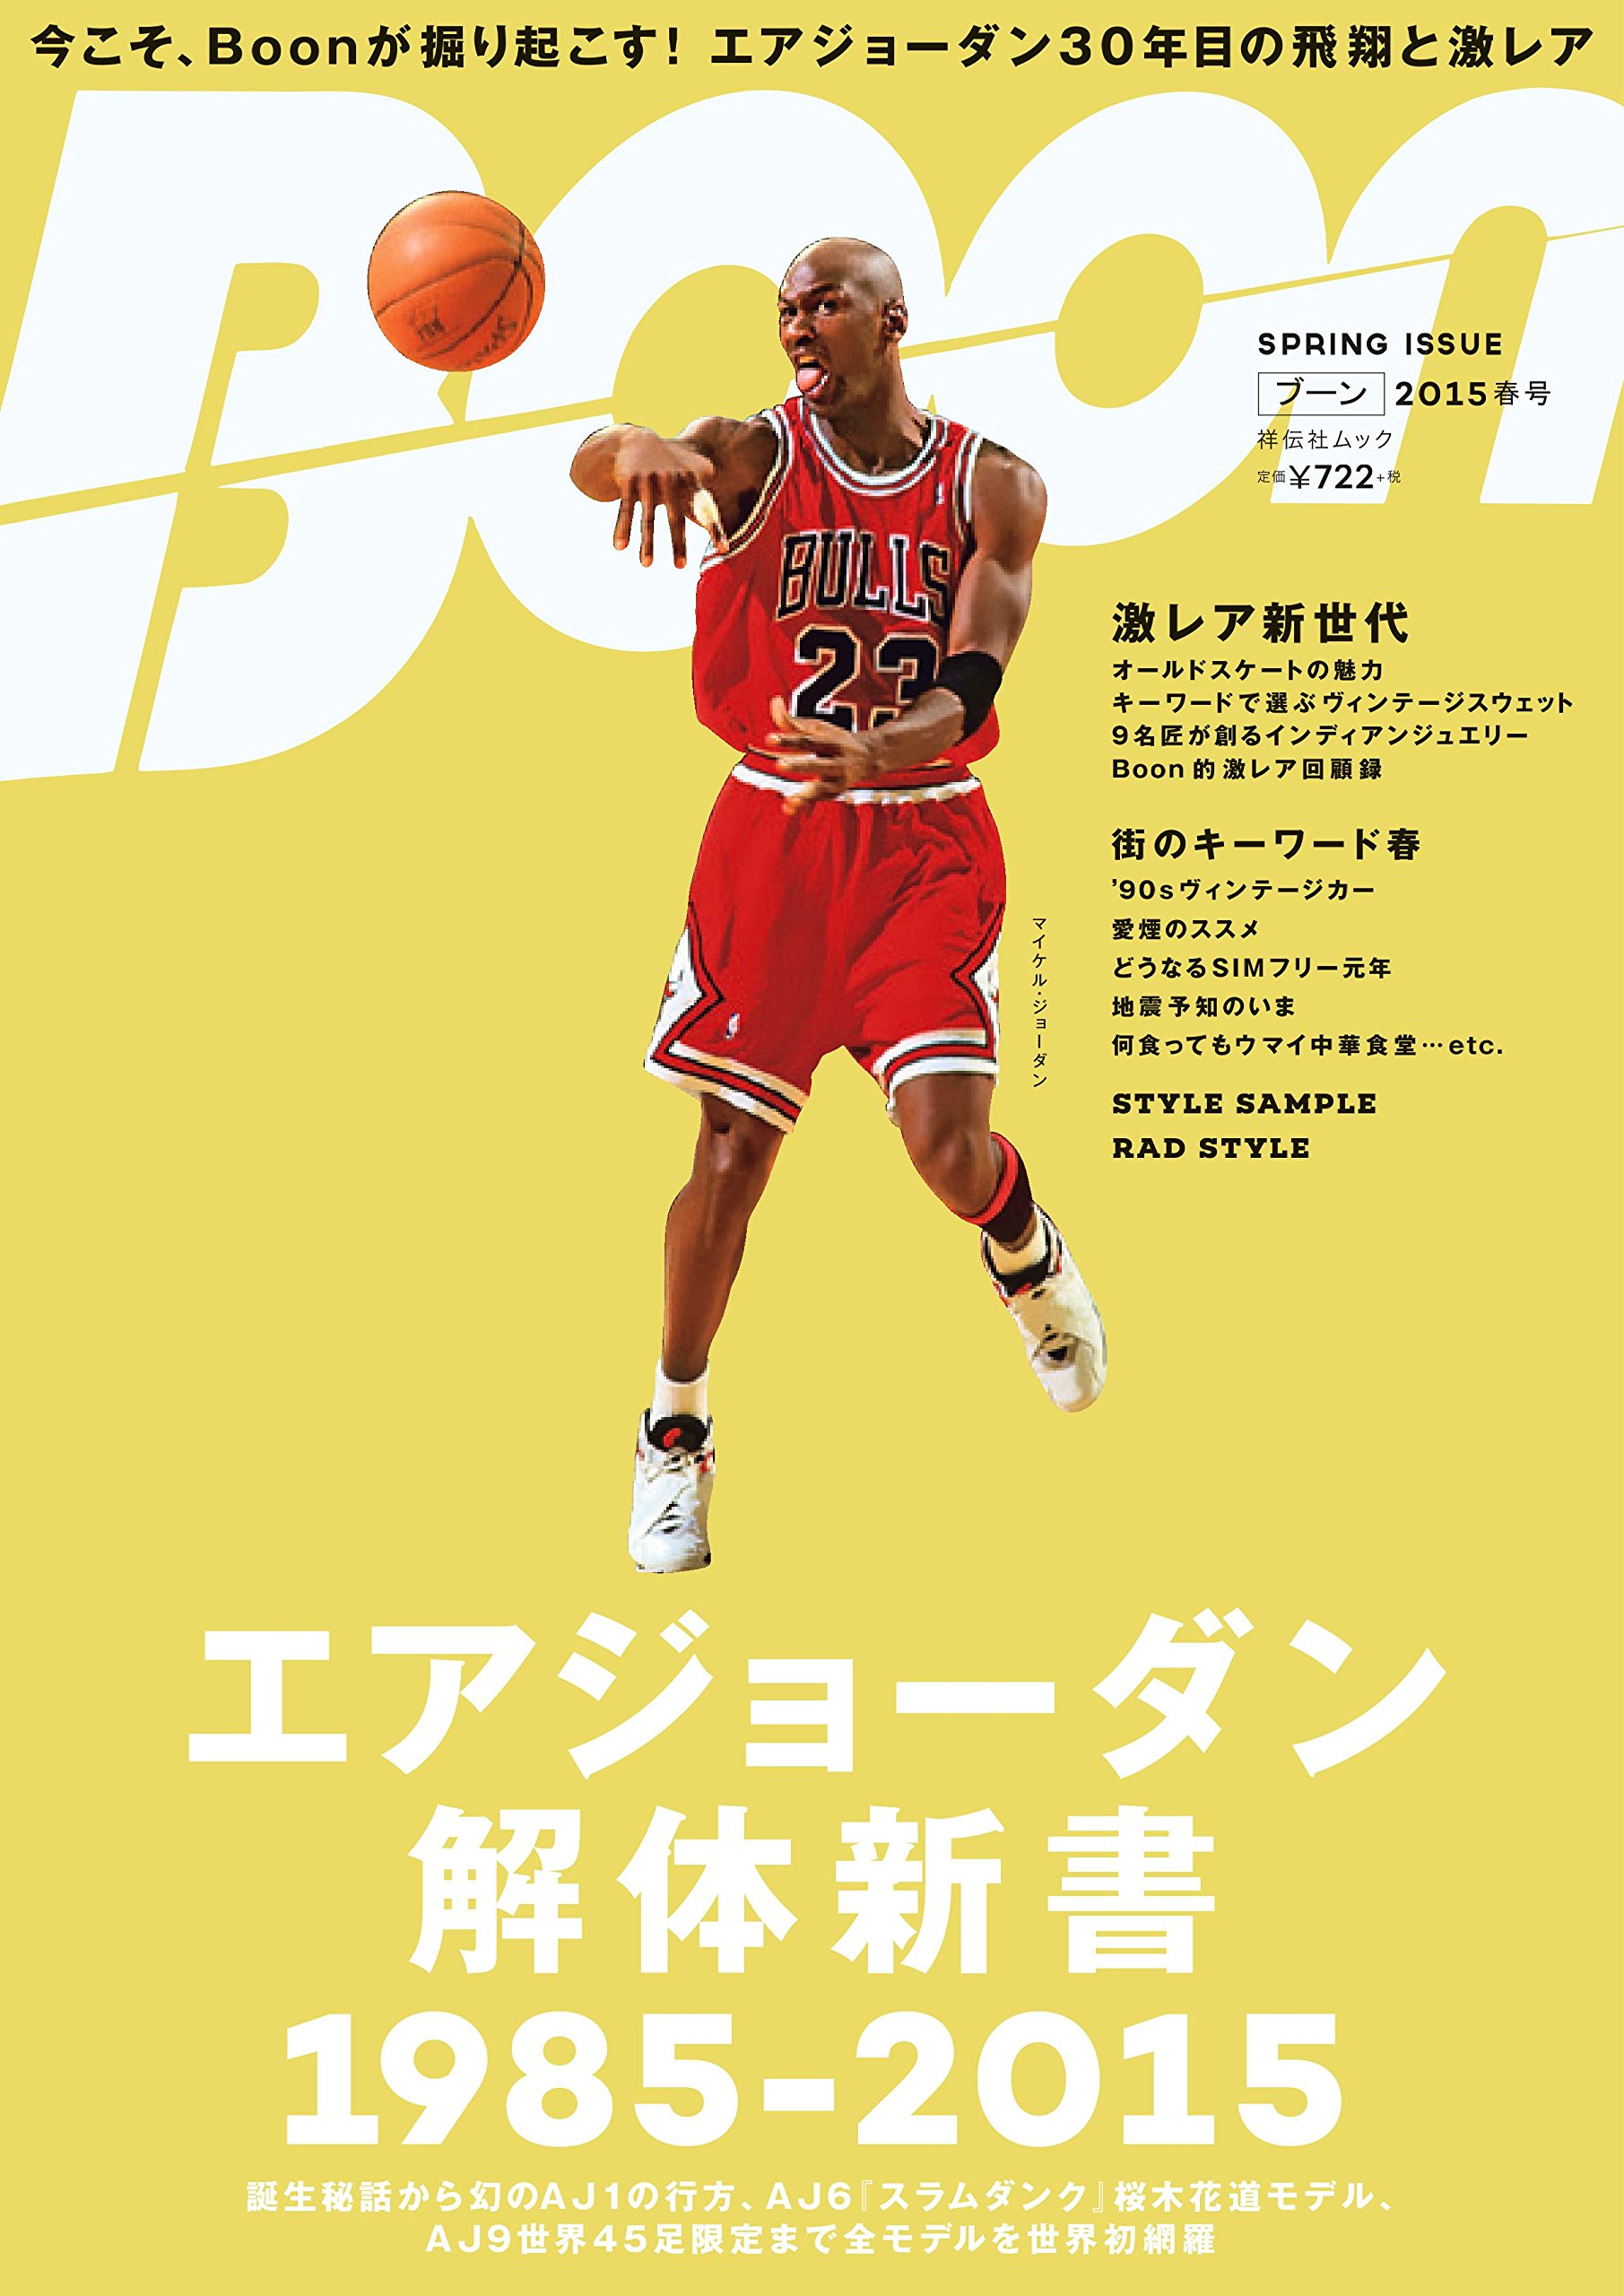 Boon 2015春號 表紙: Michael Jordan